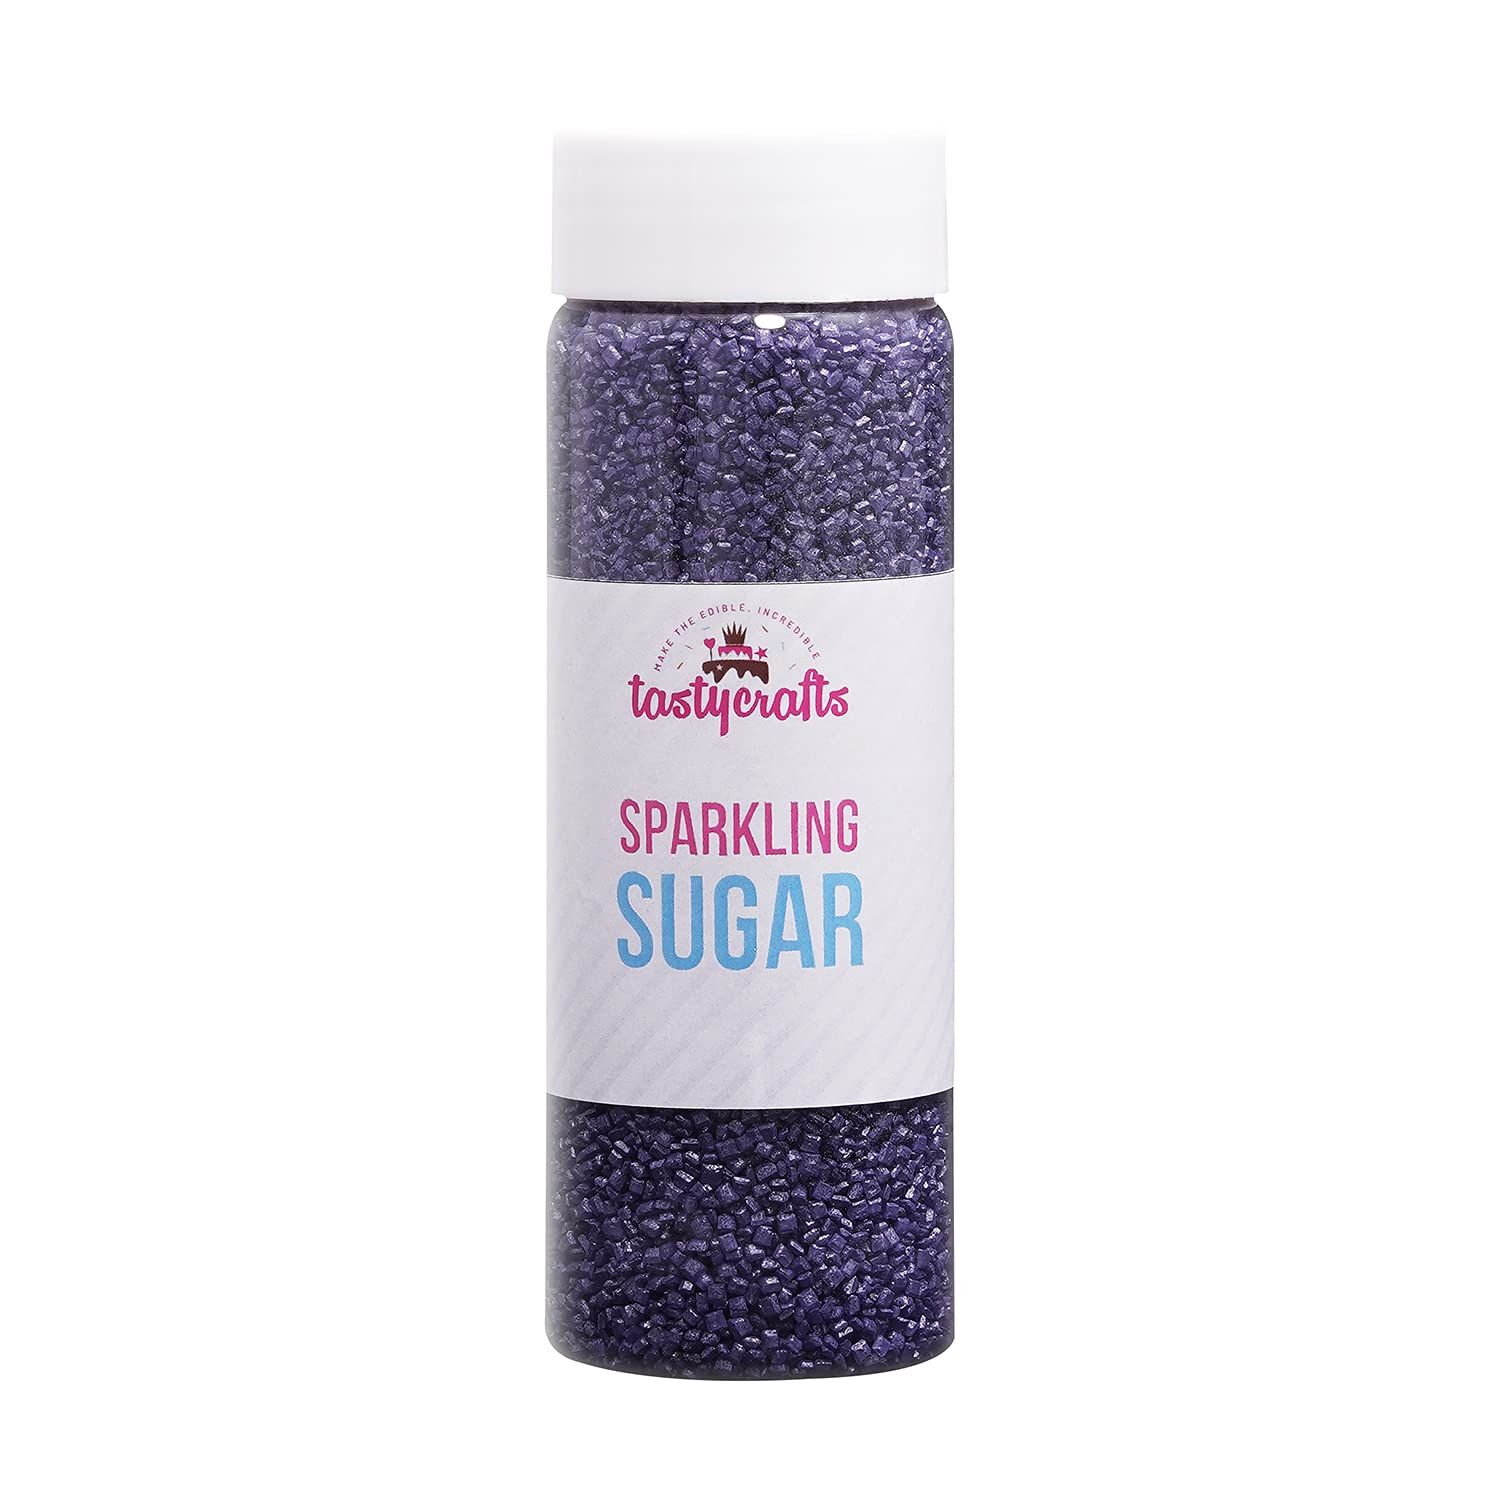 Tastycrafts Sparkling Sugar Purple Image